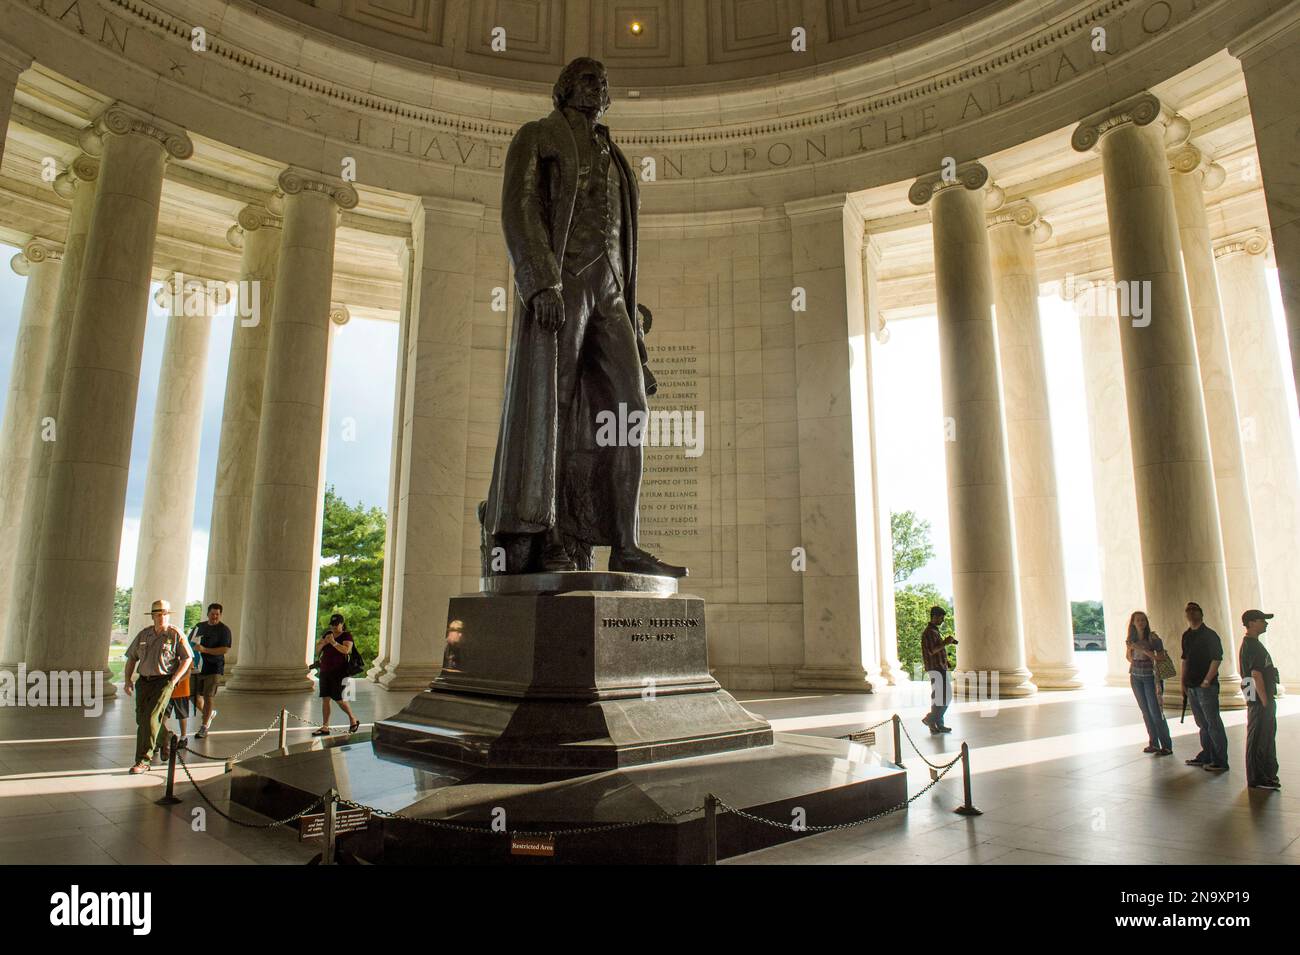 Jefferson Memorial im District of Columbia, Washington, USA; Washington, District of Columbia, Vereinigte Staaten von Amerika Stockfoto